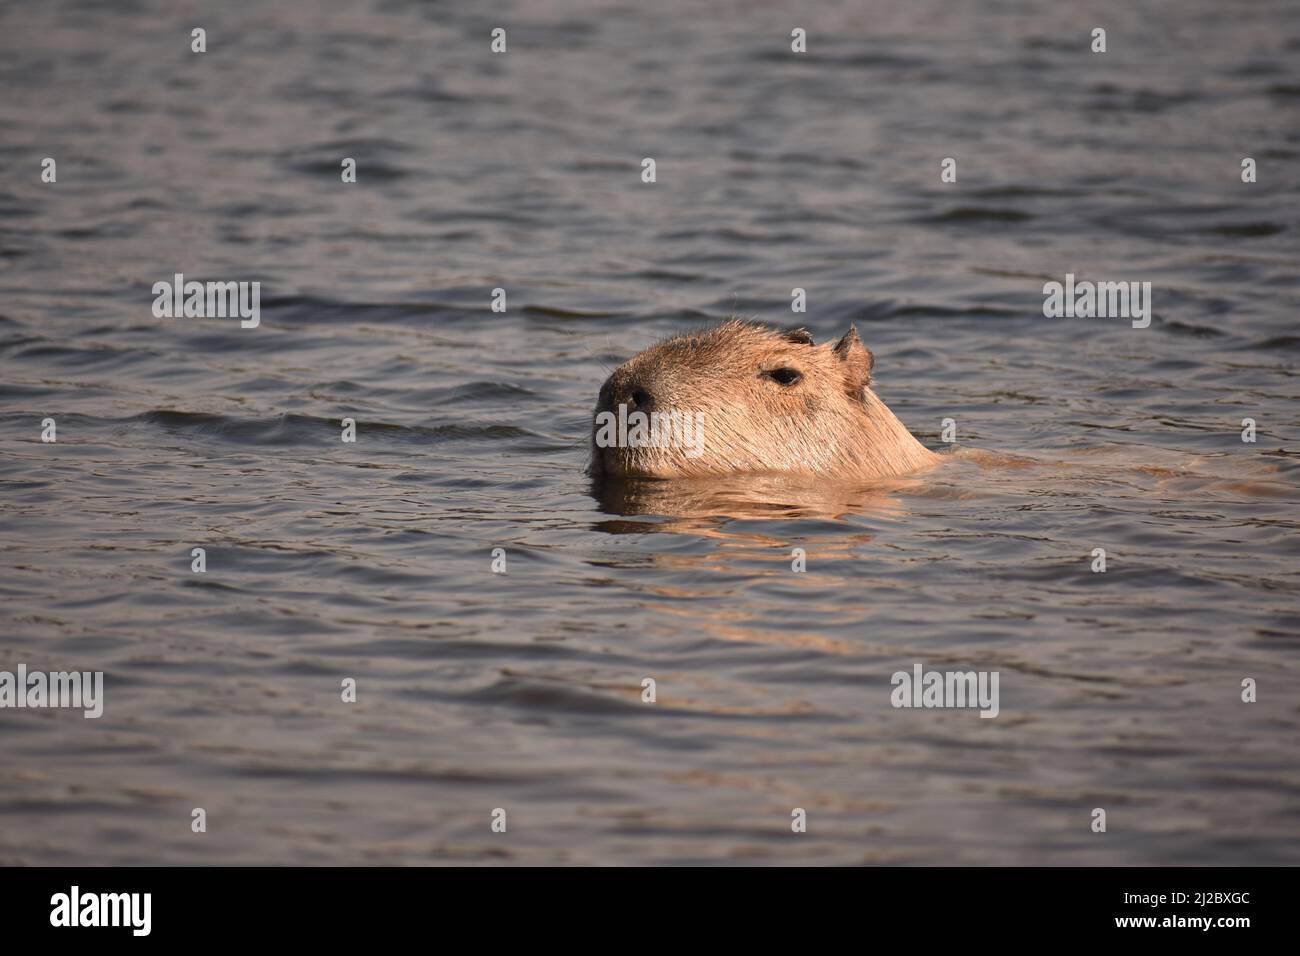 A cute furry capybara swimming in a lake Stock Photo - Alamy